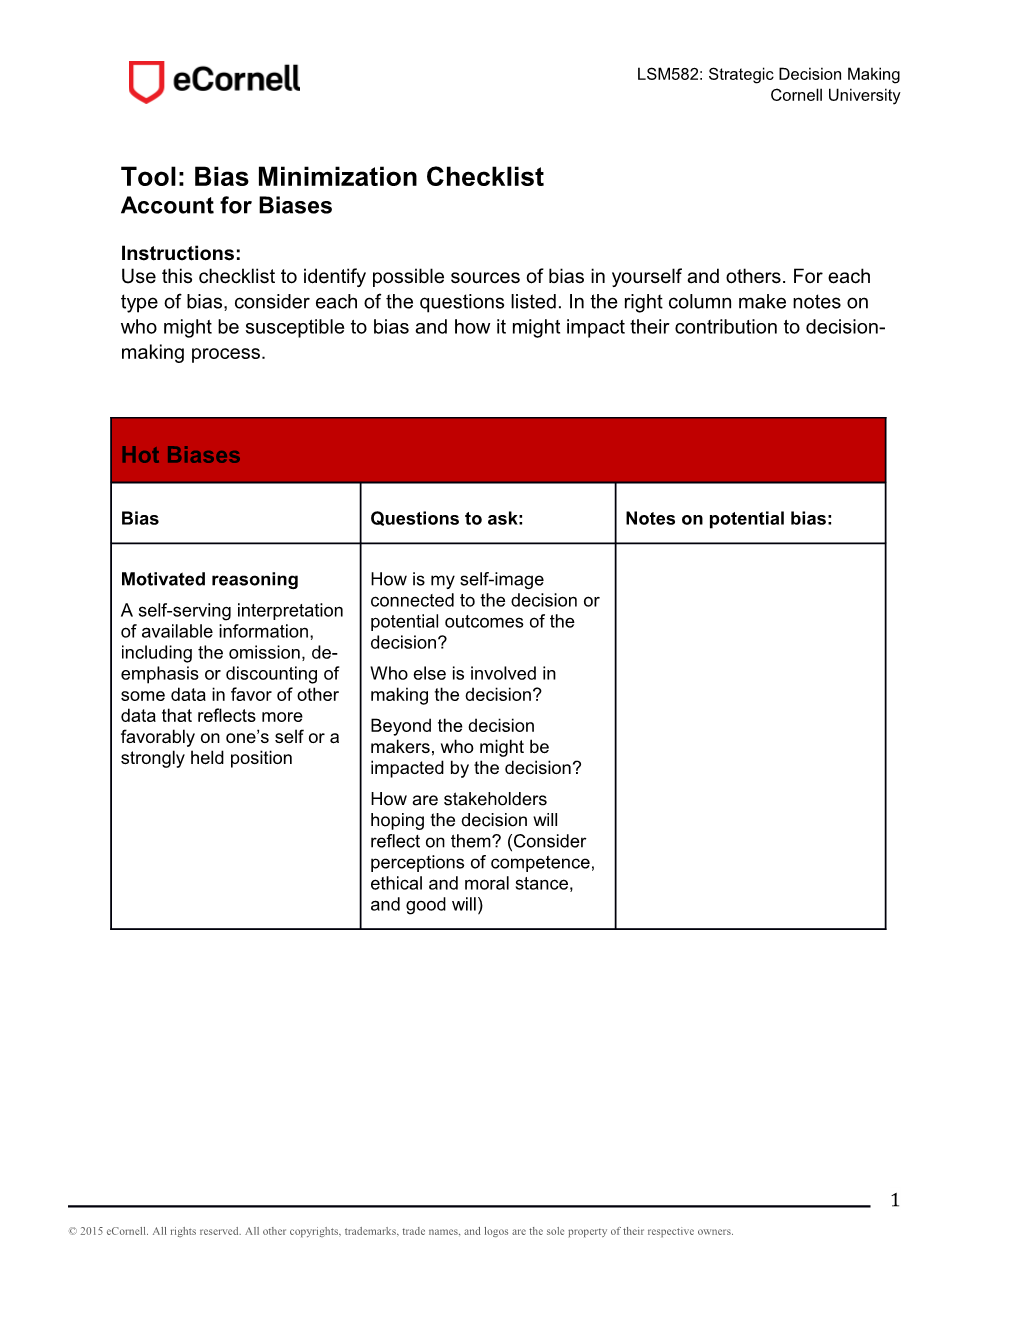 Tool: Bias Minimization Checklist